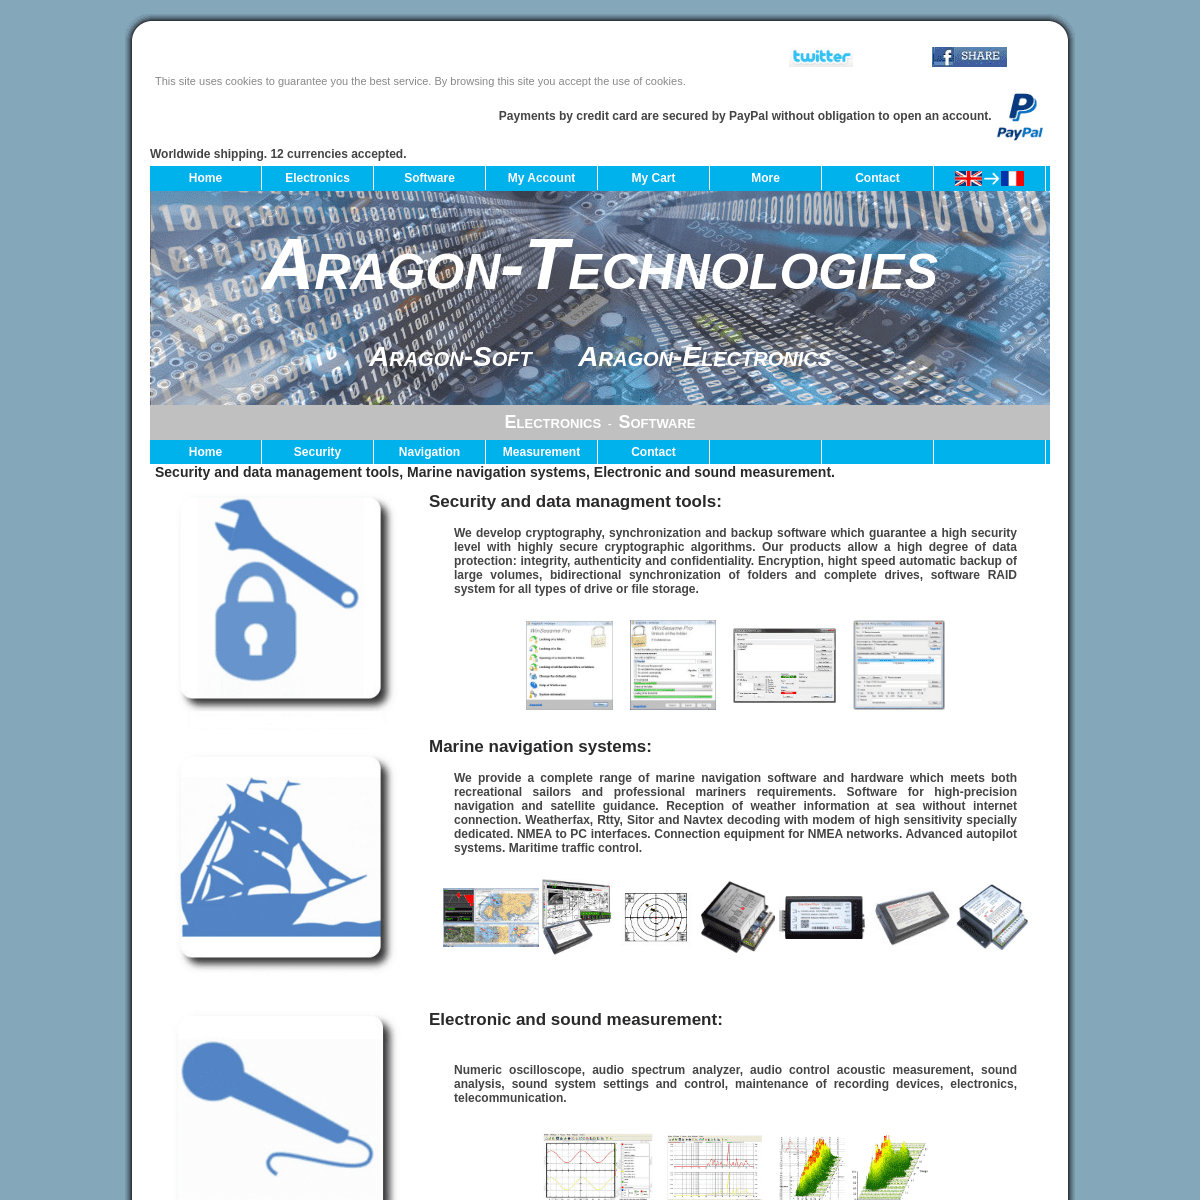 A complete backup of aragon-technologies.com